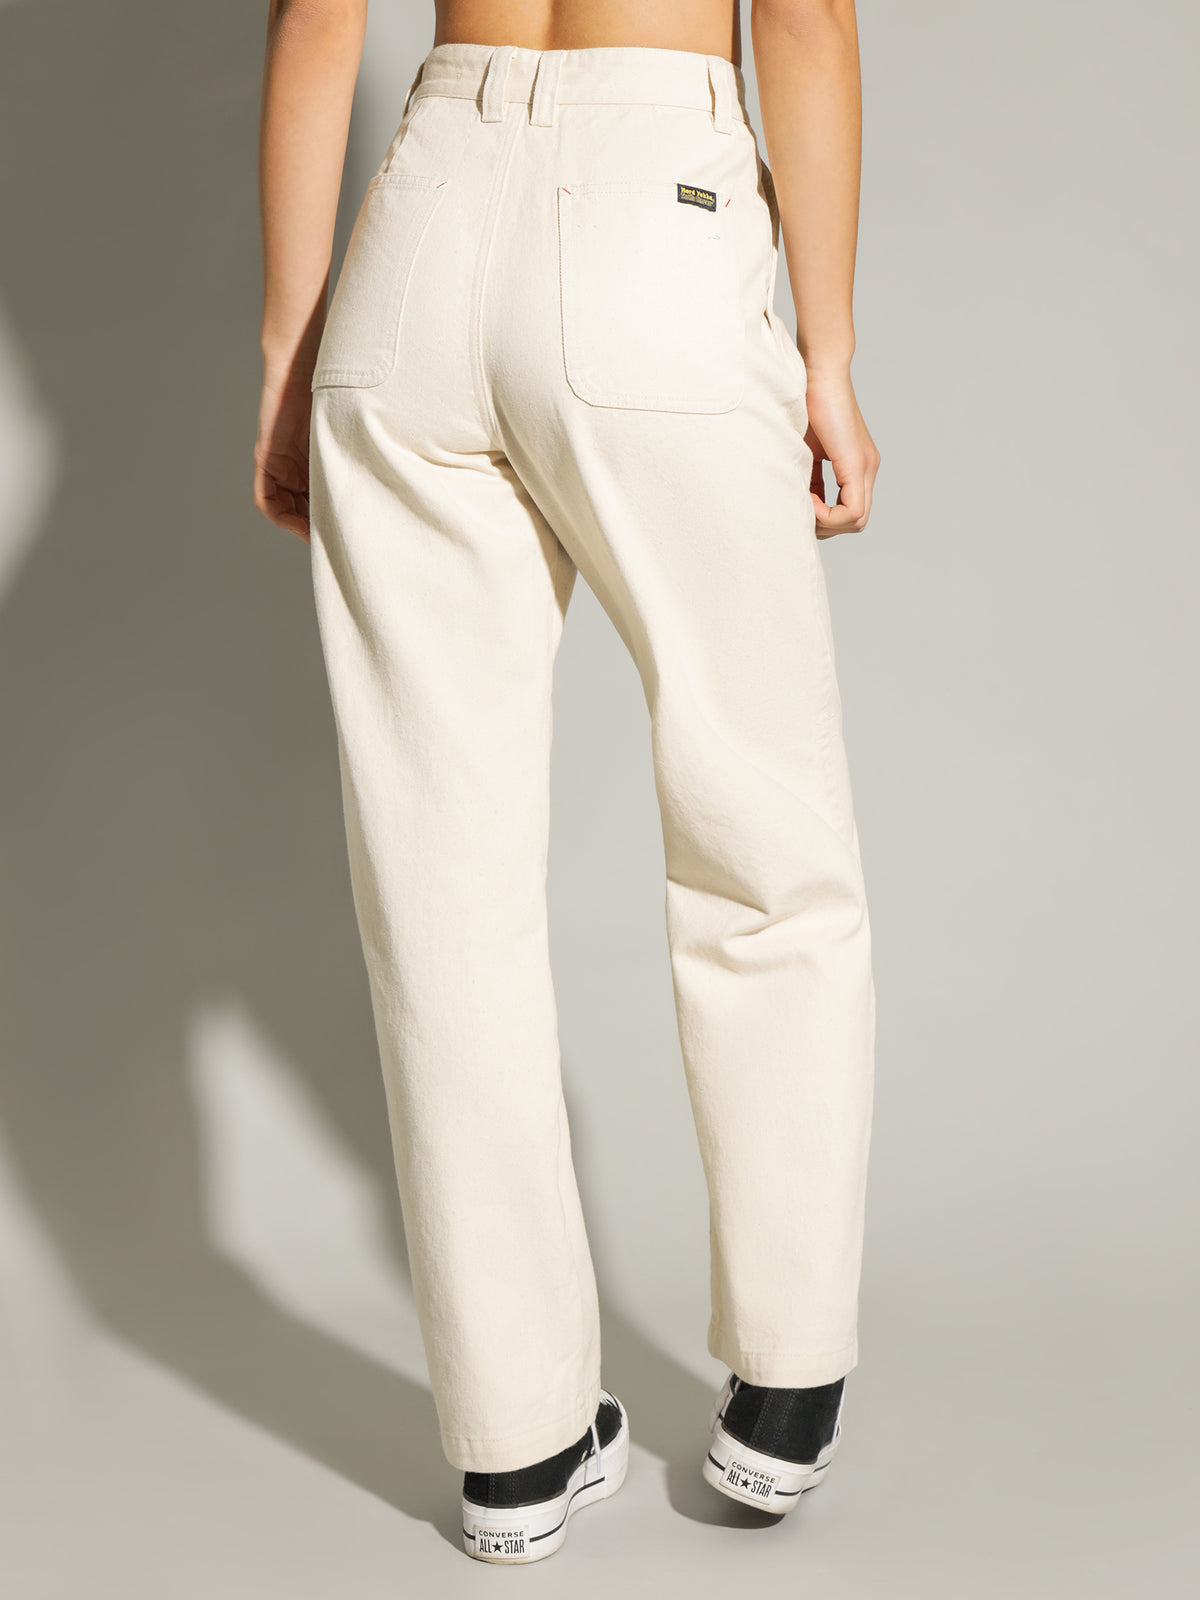 Hard Yakka LAX Pants in Unbleached White